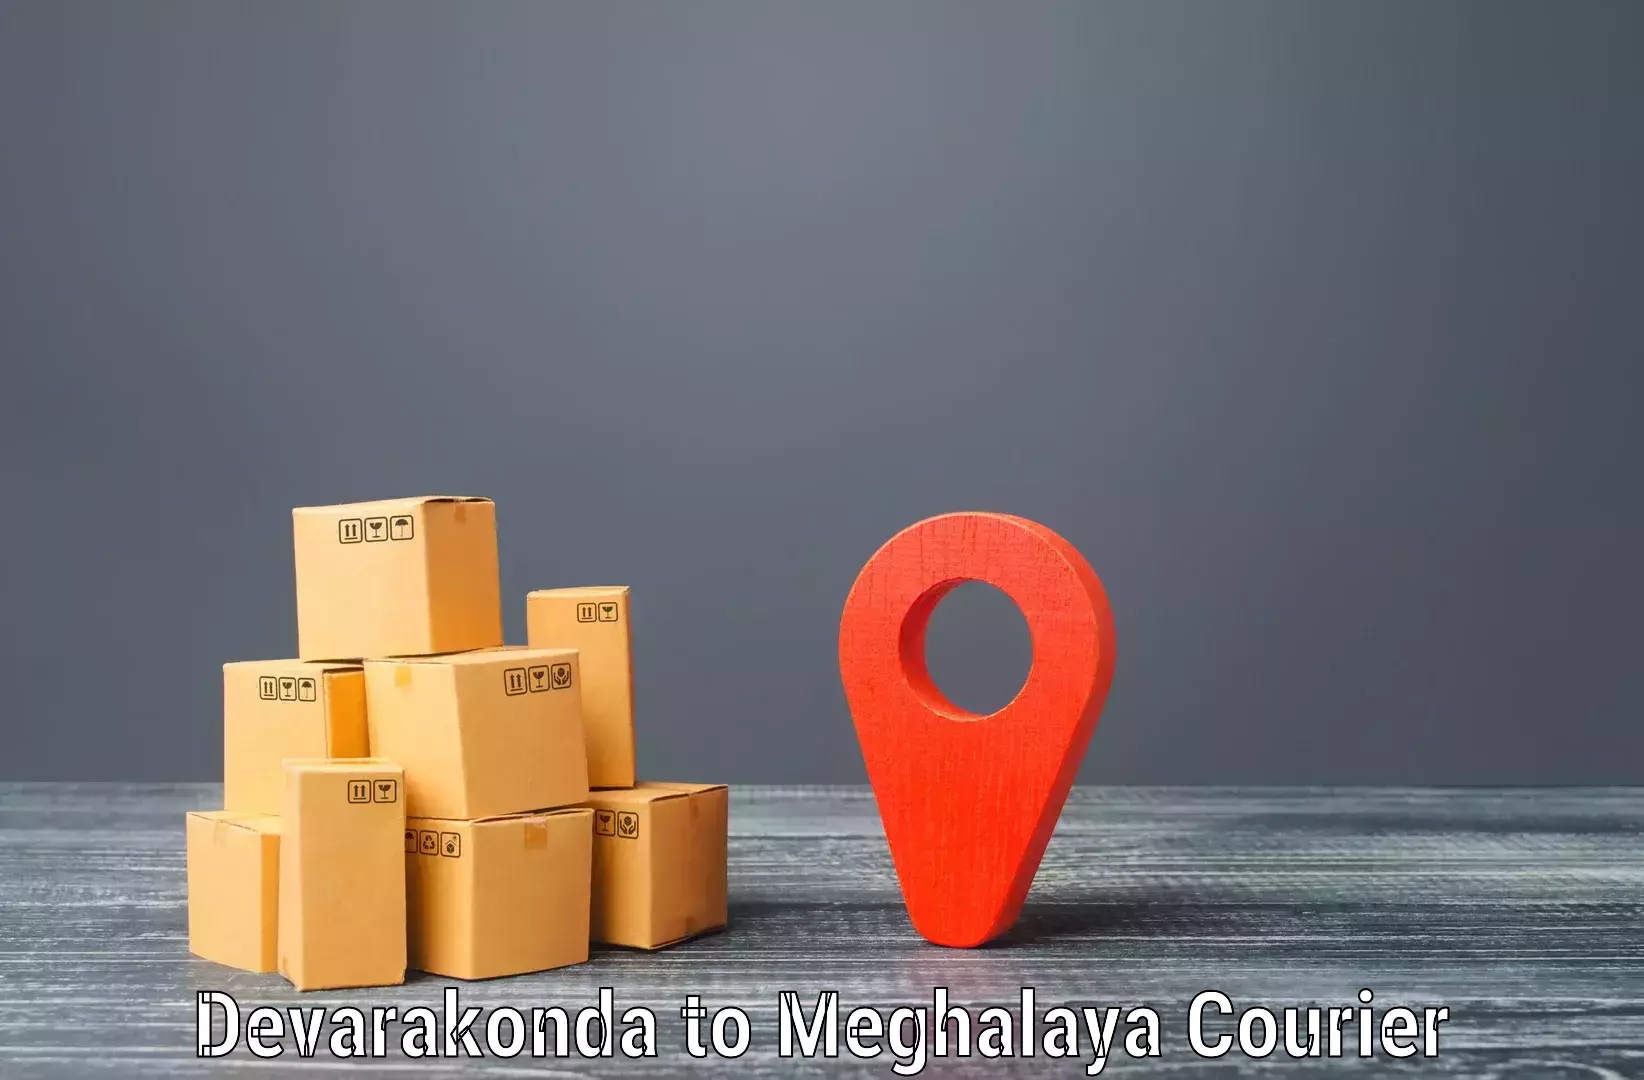 Business delivery service Devarakonda to Tura